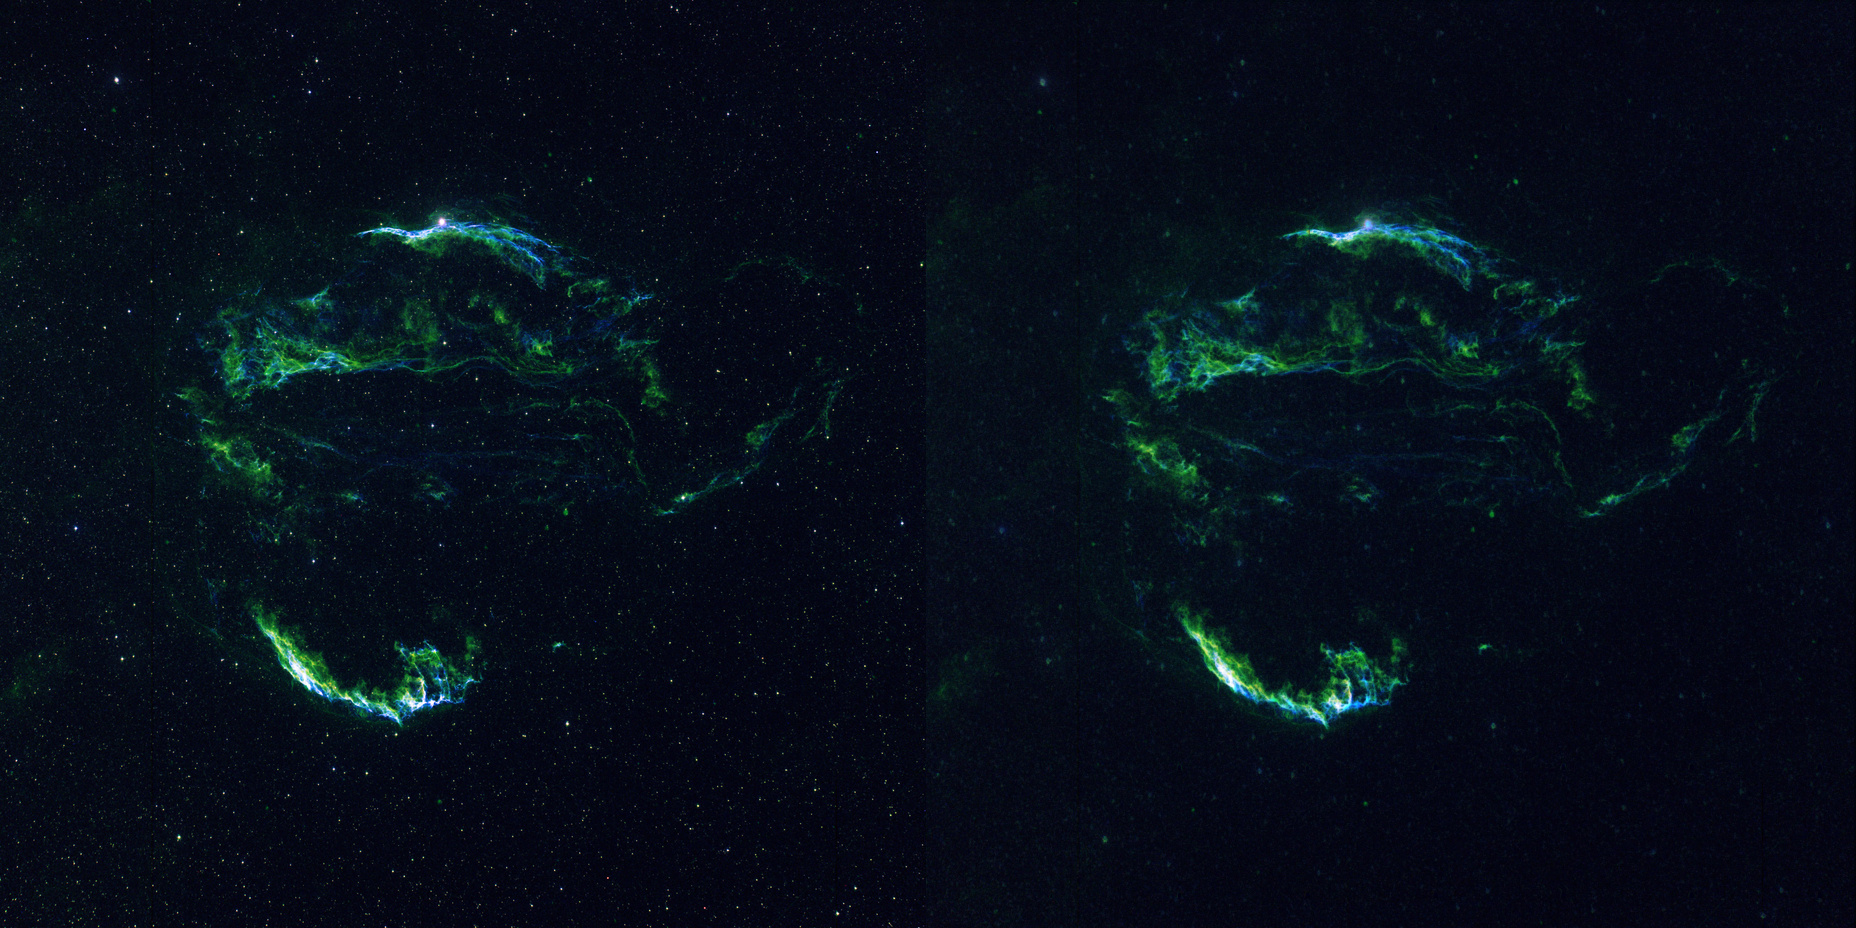 Original and starless image of Veil Nebula